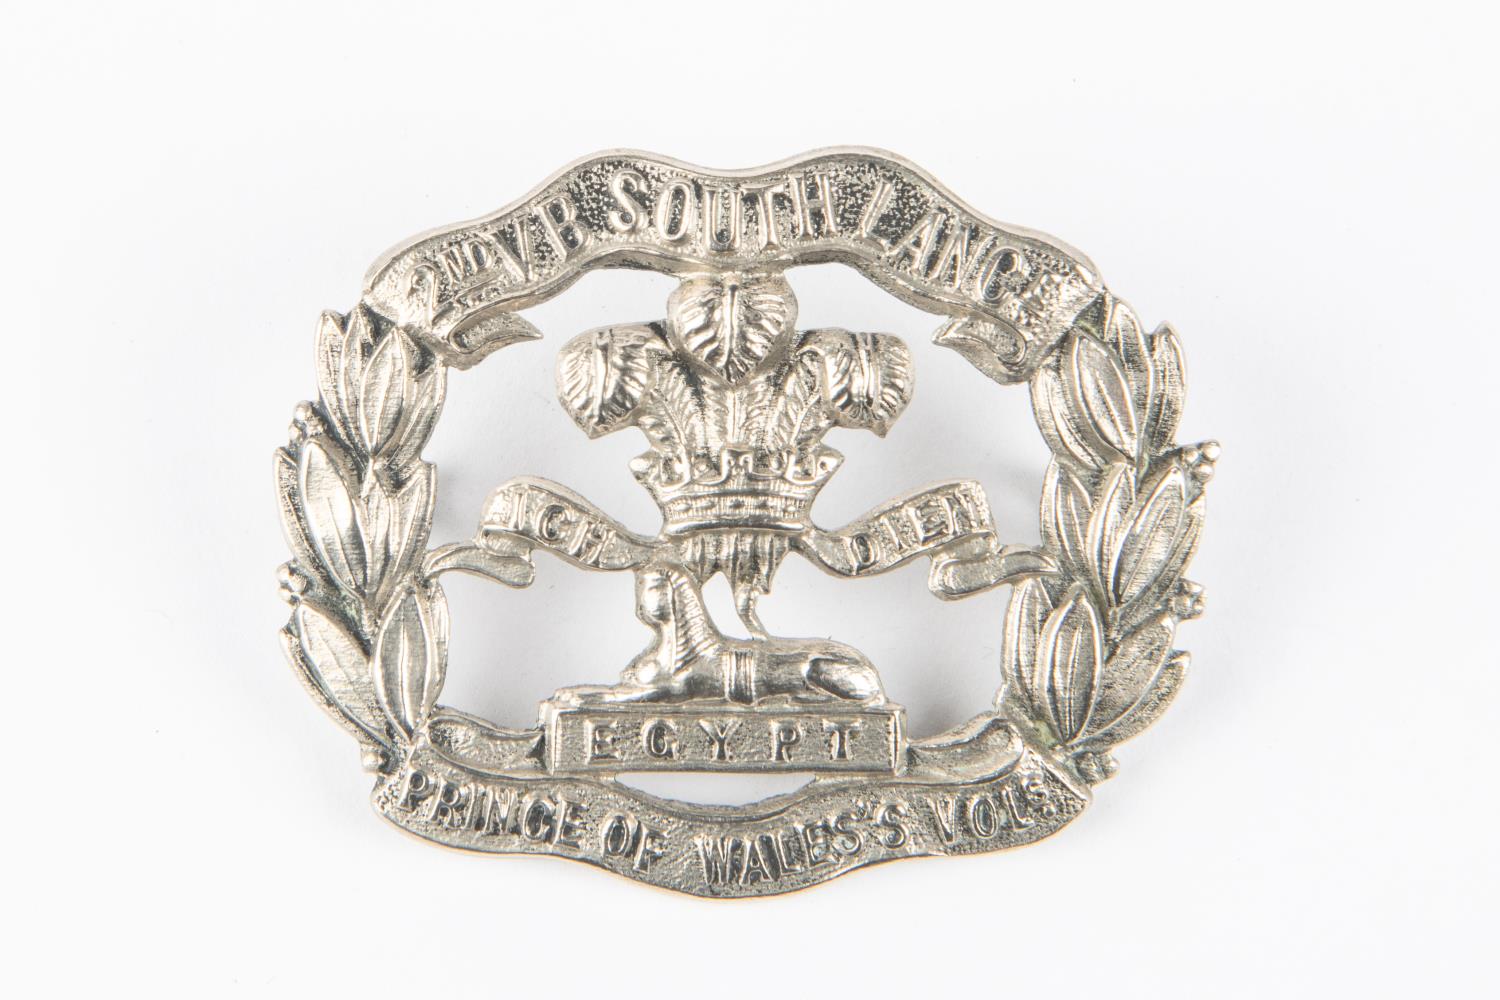 A WM cap badge of the 2nd Vol Bn South Lancashire Regt. GC £40-60